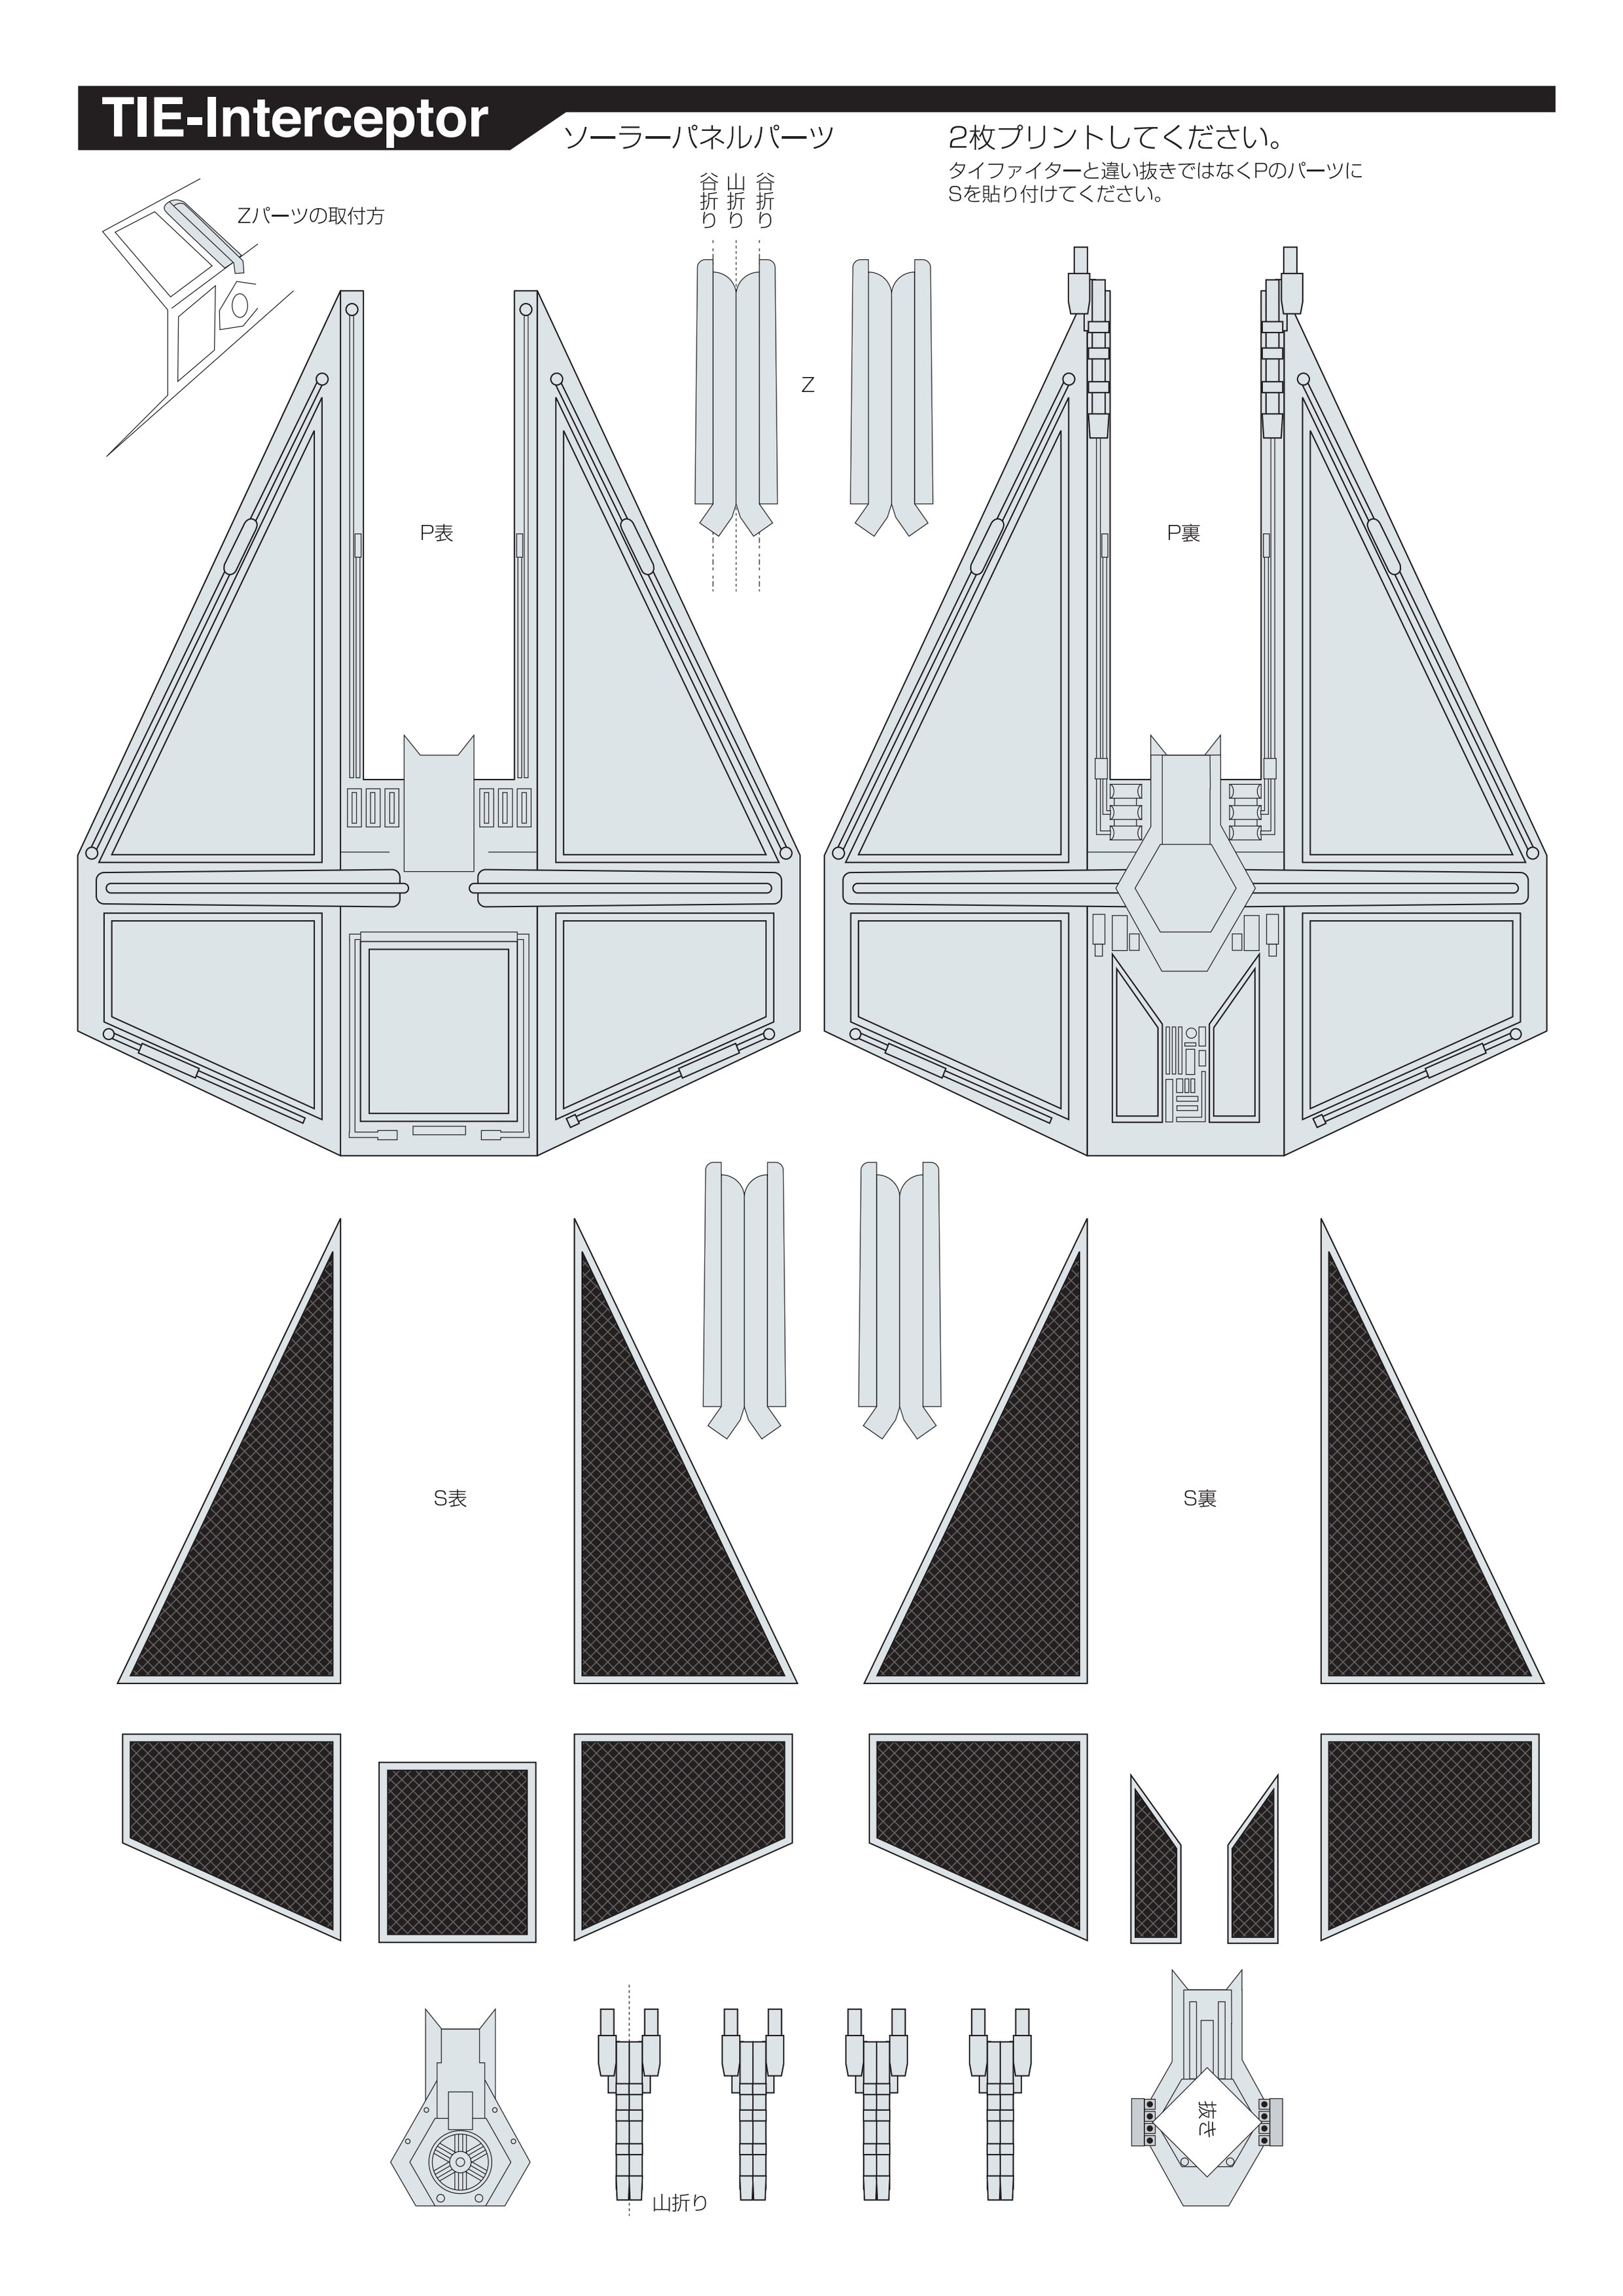 Star Wars - TIE Interceptor scale 1-48 A4 - 04.jpg